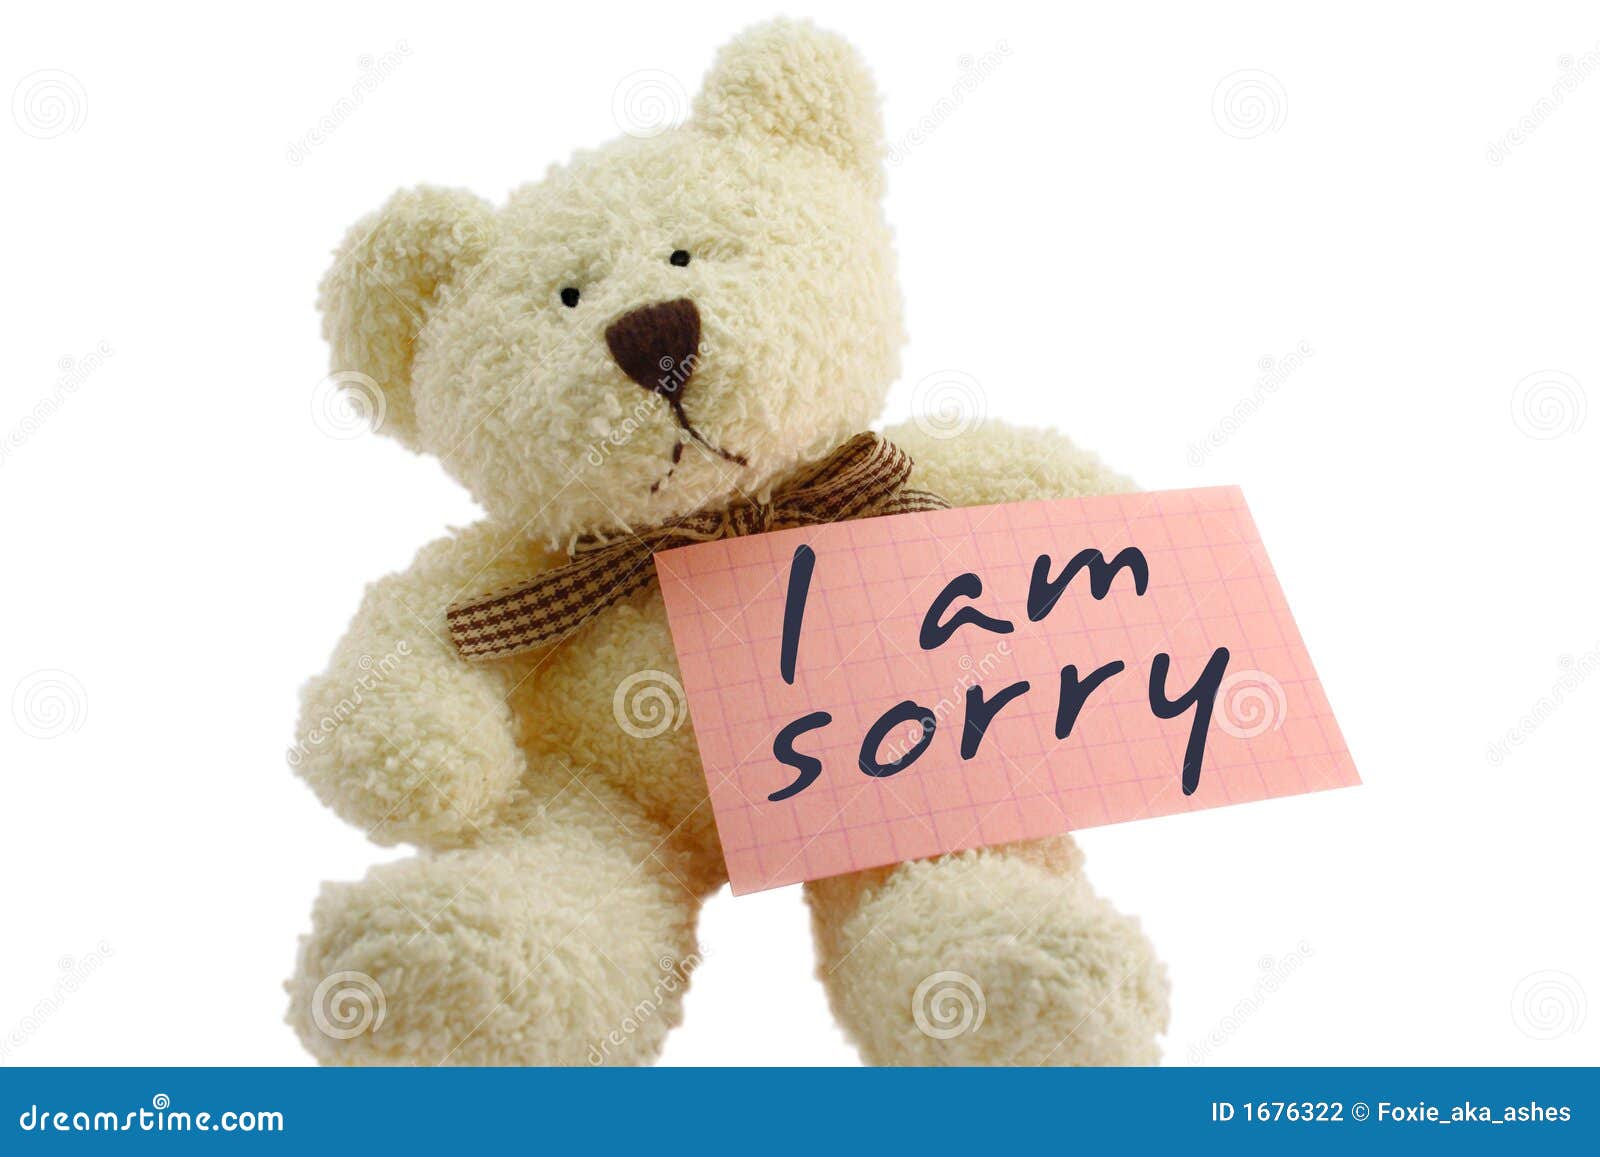 teddy-i-sorry-1676322.jpg